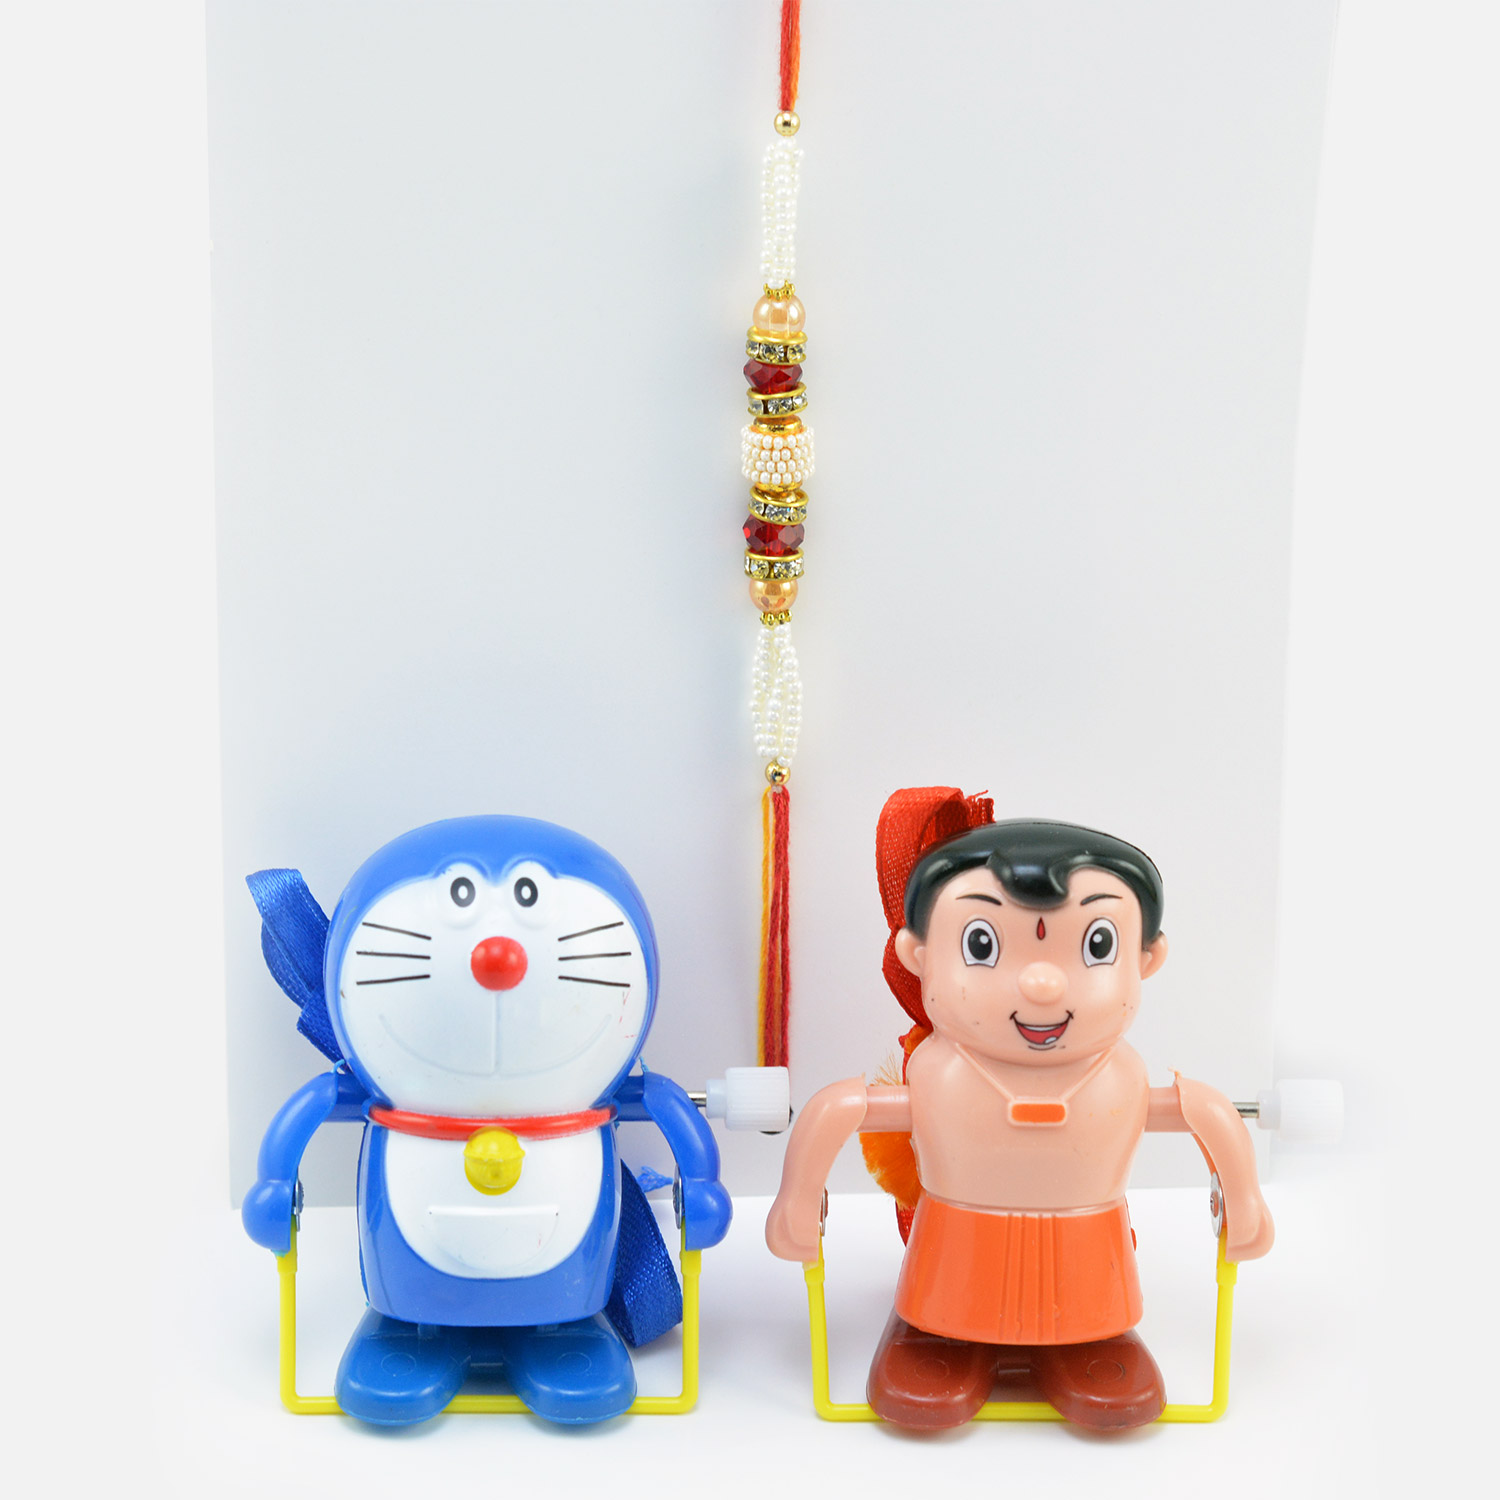 Doraemon and Bheem Rakhis Toy for Kid with One Beautiful Tread Rakhi.